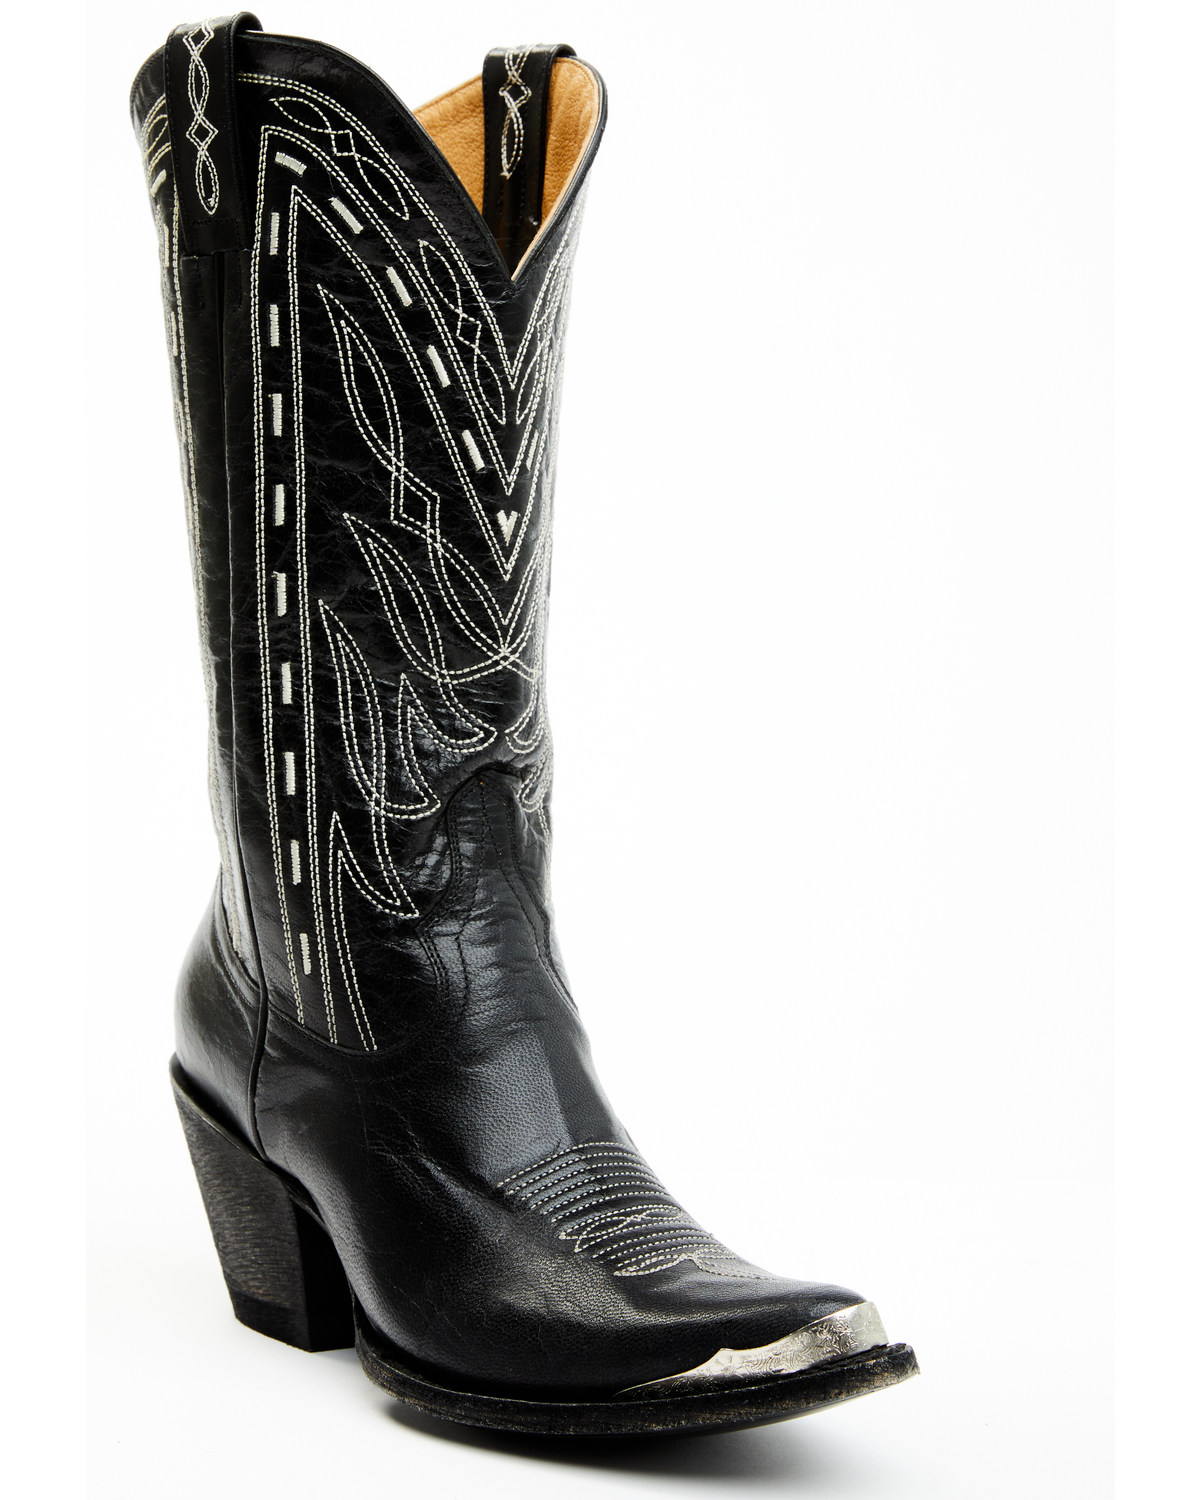 Idyllwind Women's Retro Rock Western Boots